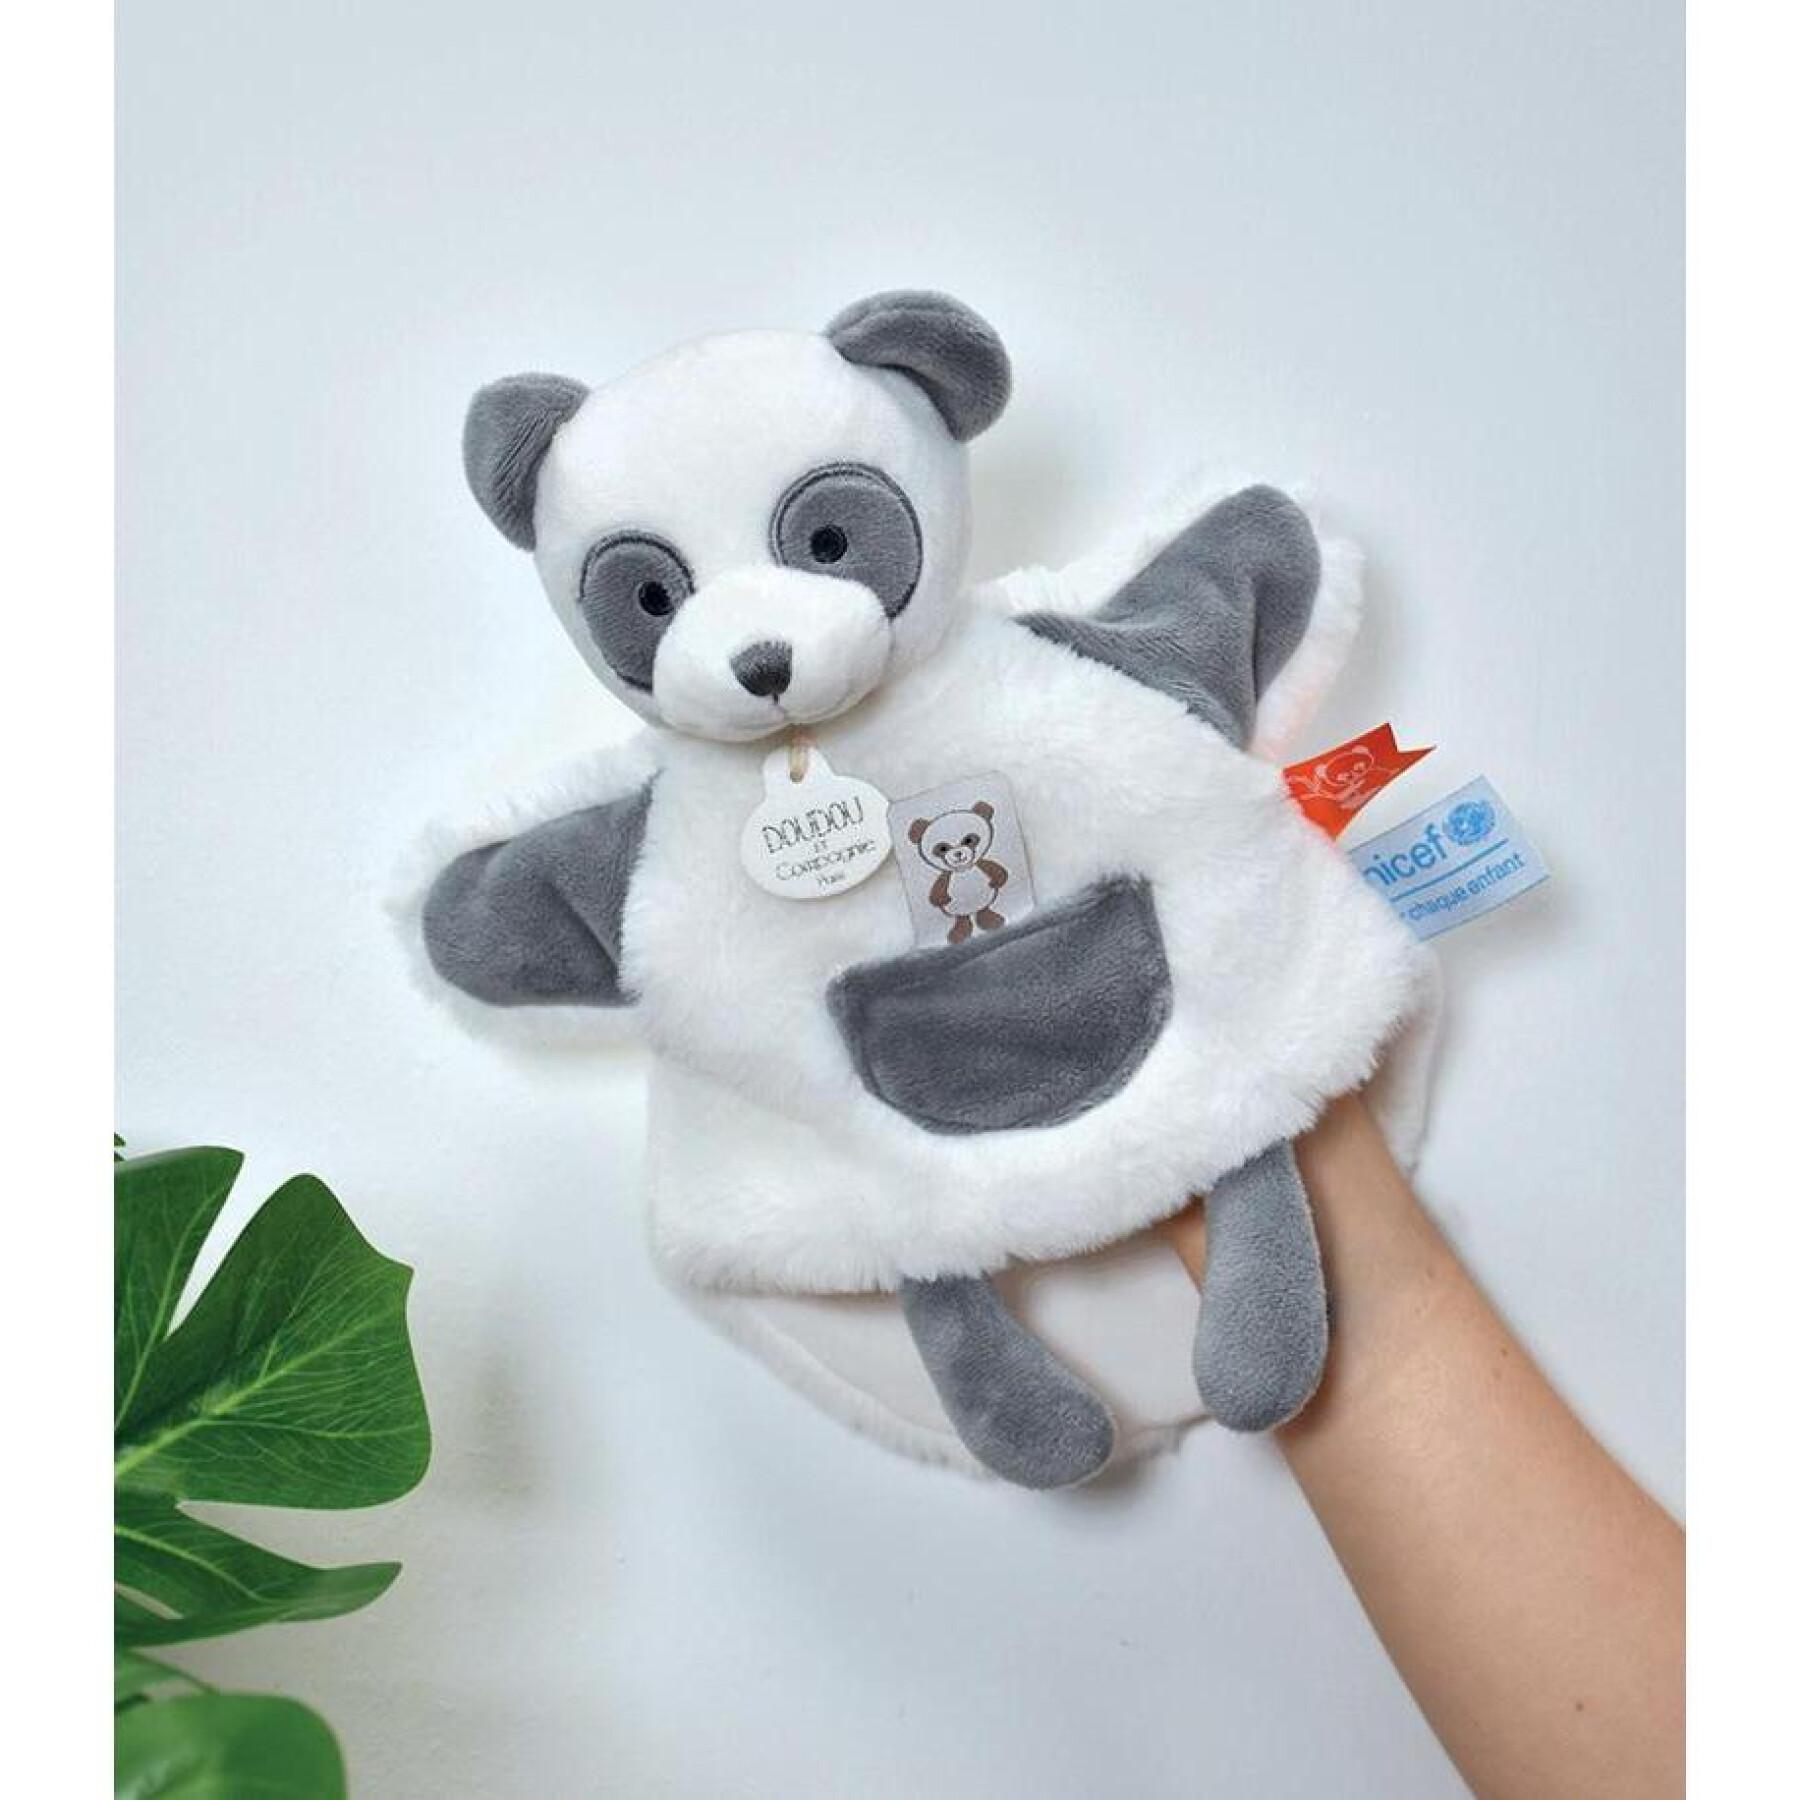 Marionettdocka Doudou & compagnie Unicef - Panda